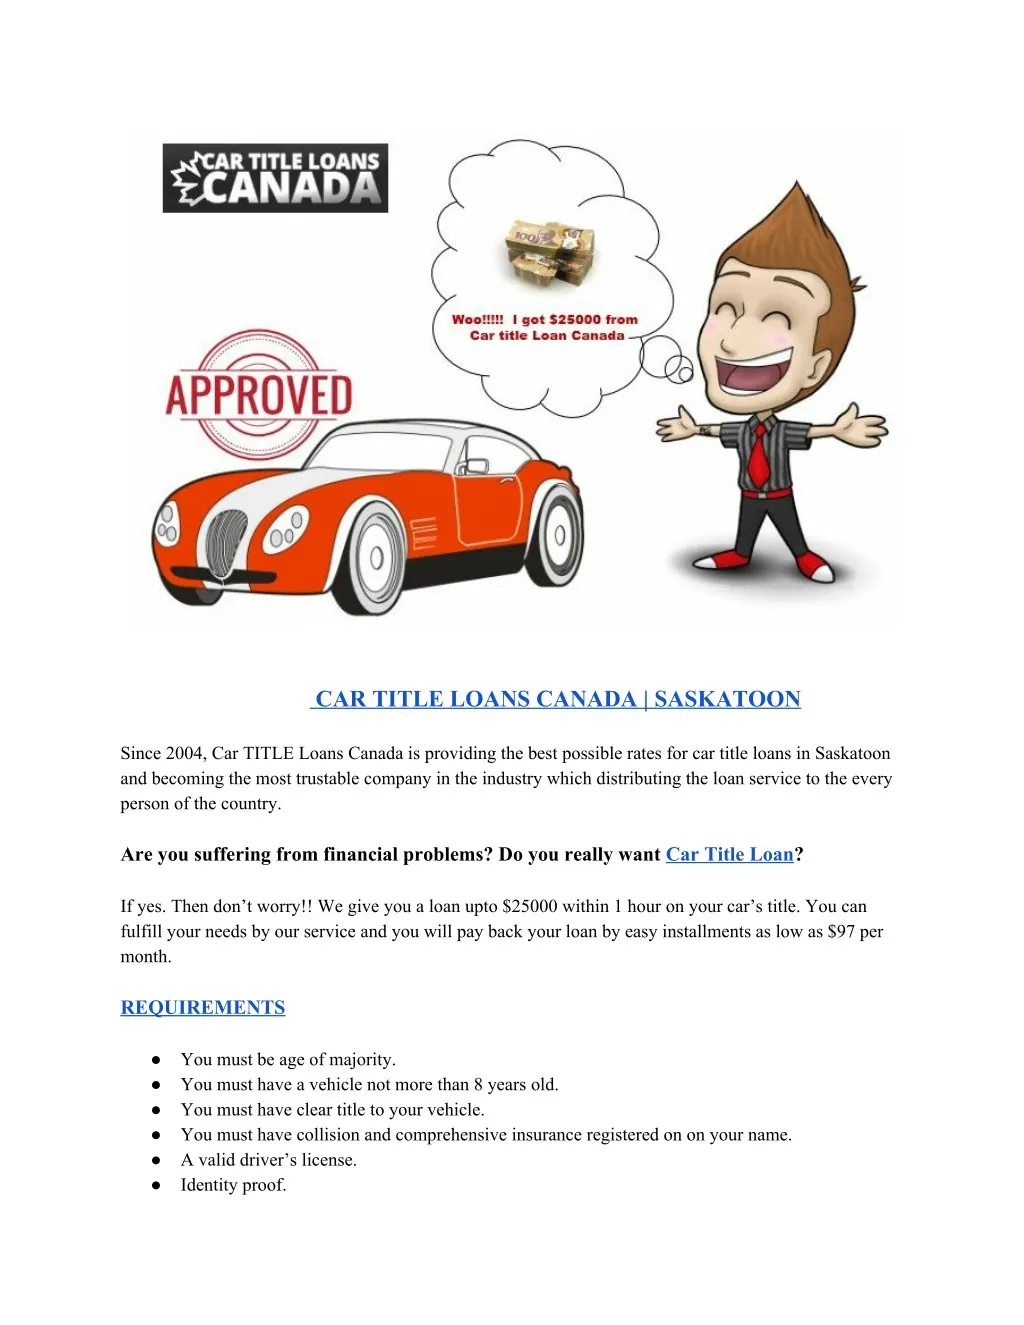 car title loans canada saskatoon